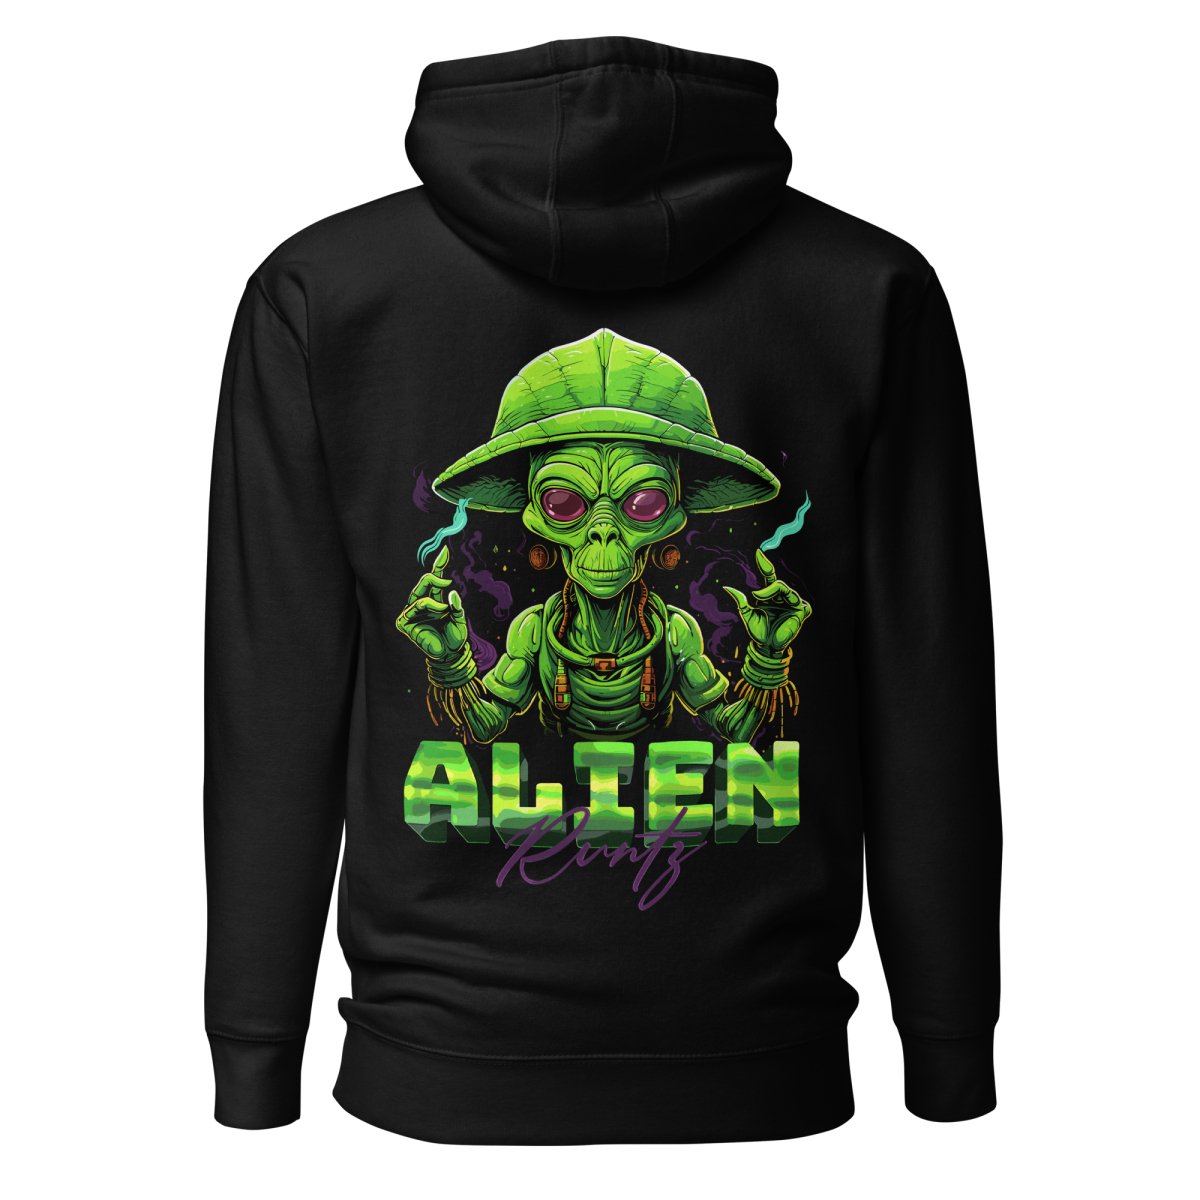 Alien Runtz Hoodie - Mainly High